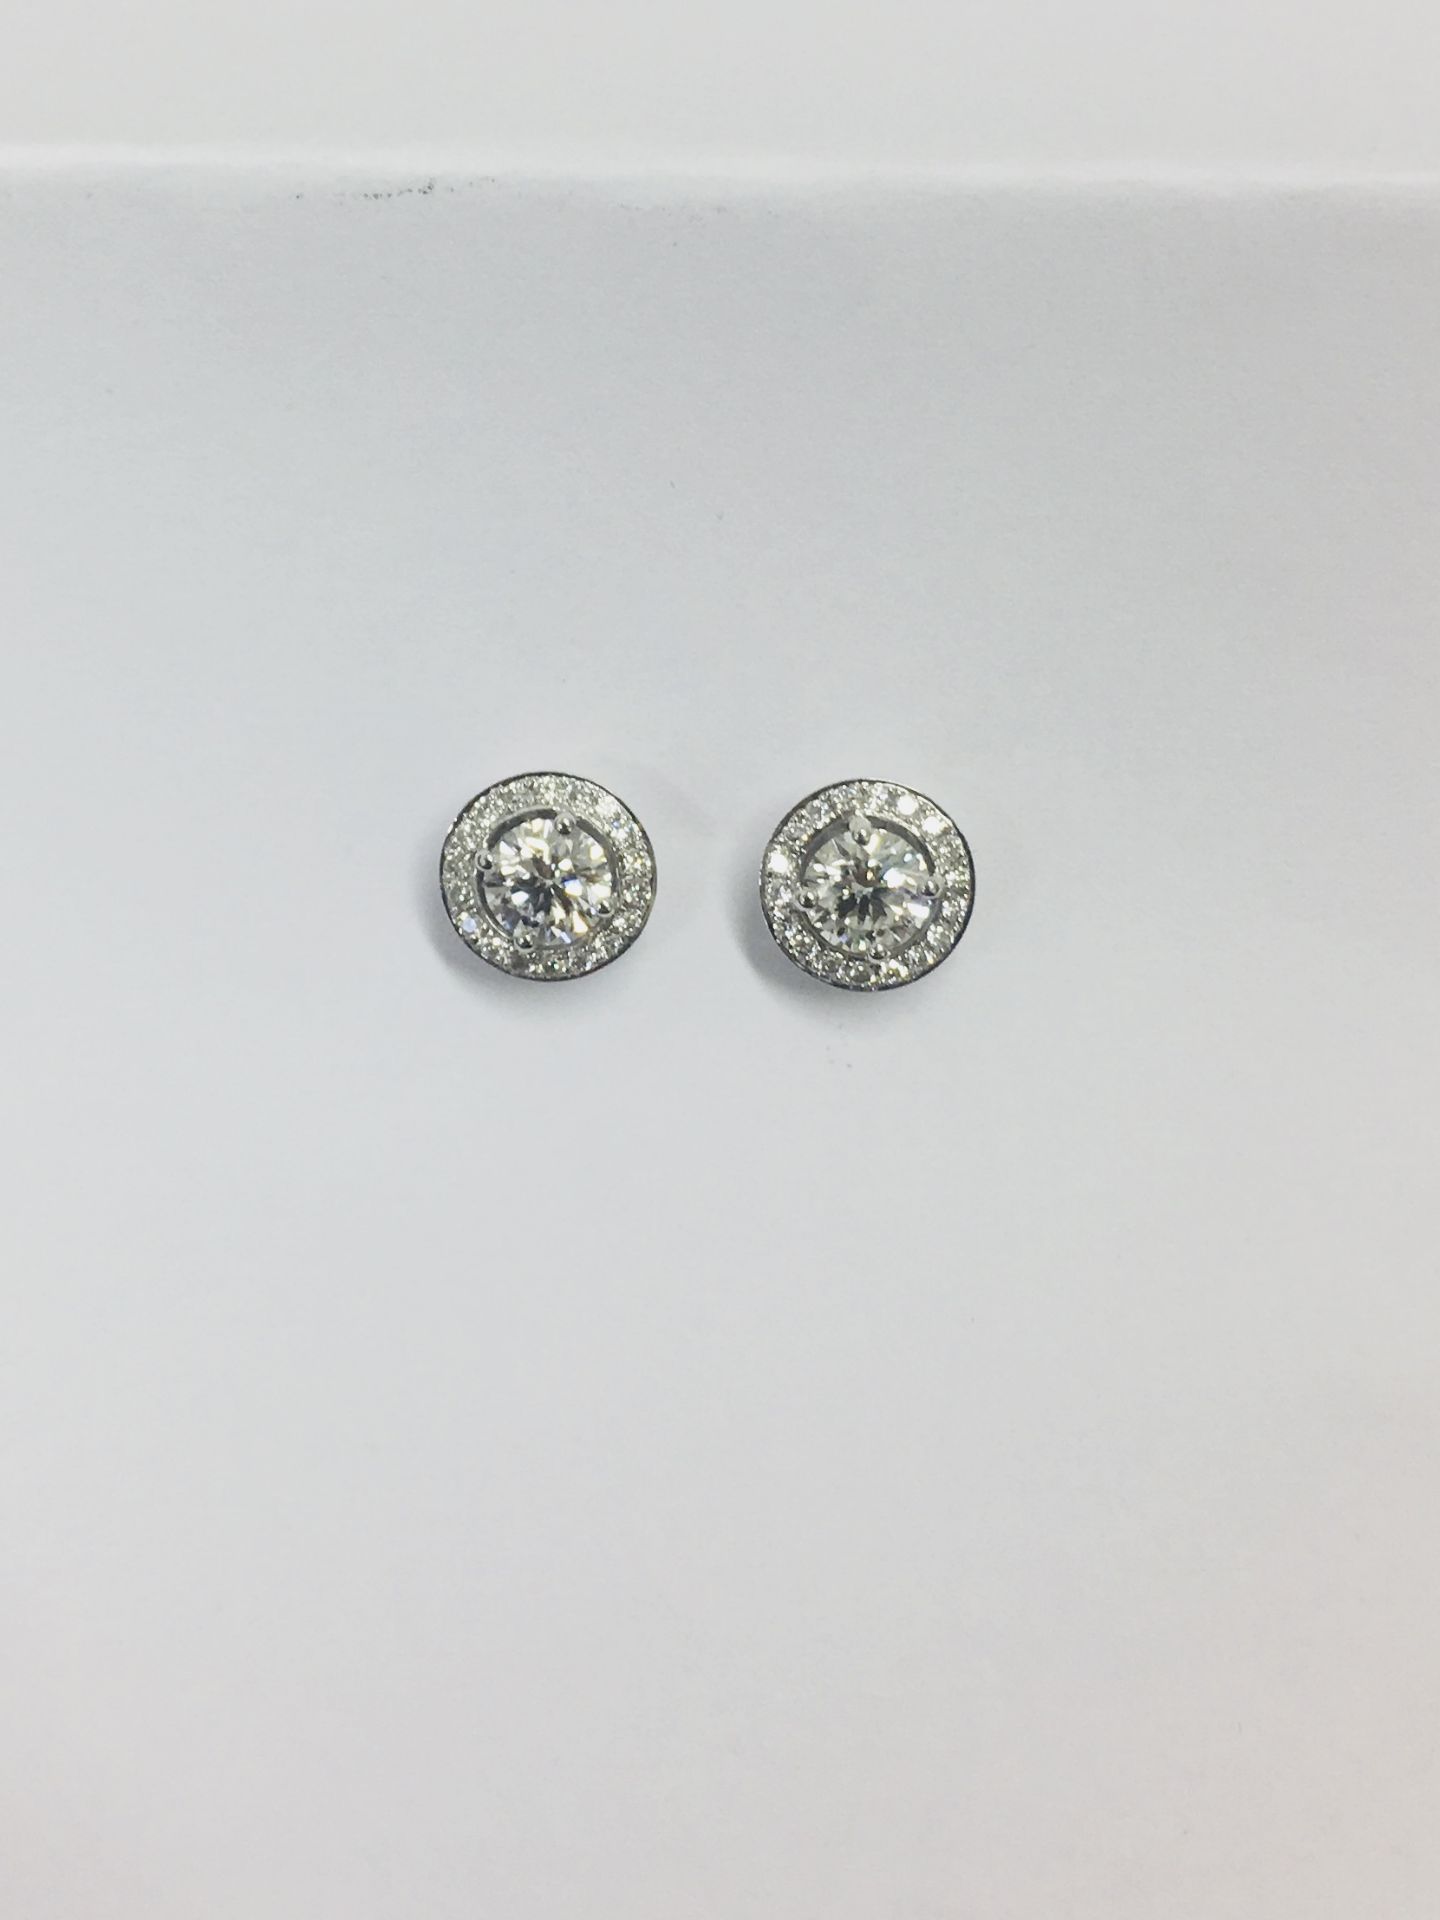 1ct diamond stud earrings ,h colour vs clarity halo set ,18ct white 3.2gms heavy mounts diamond - Image 3 of 4